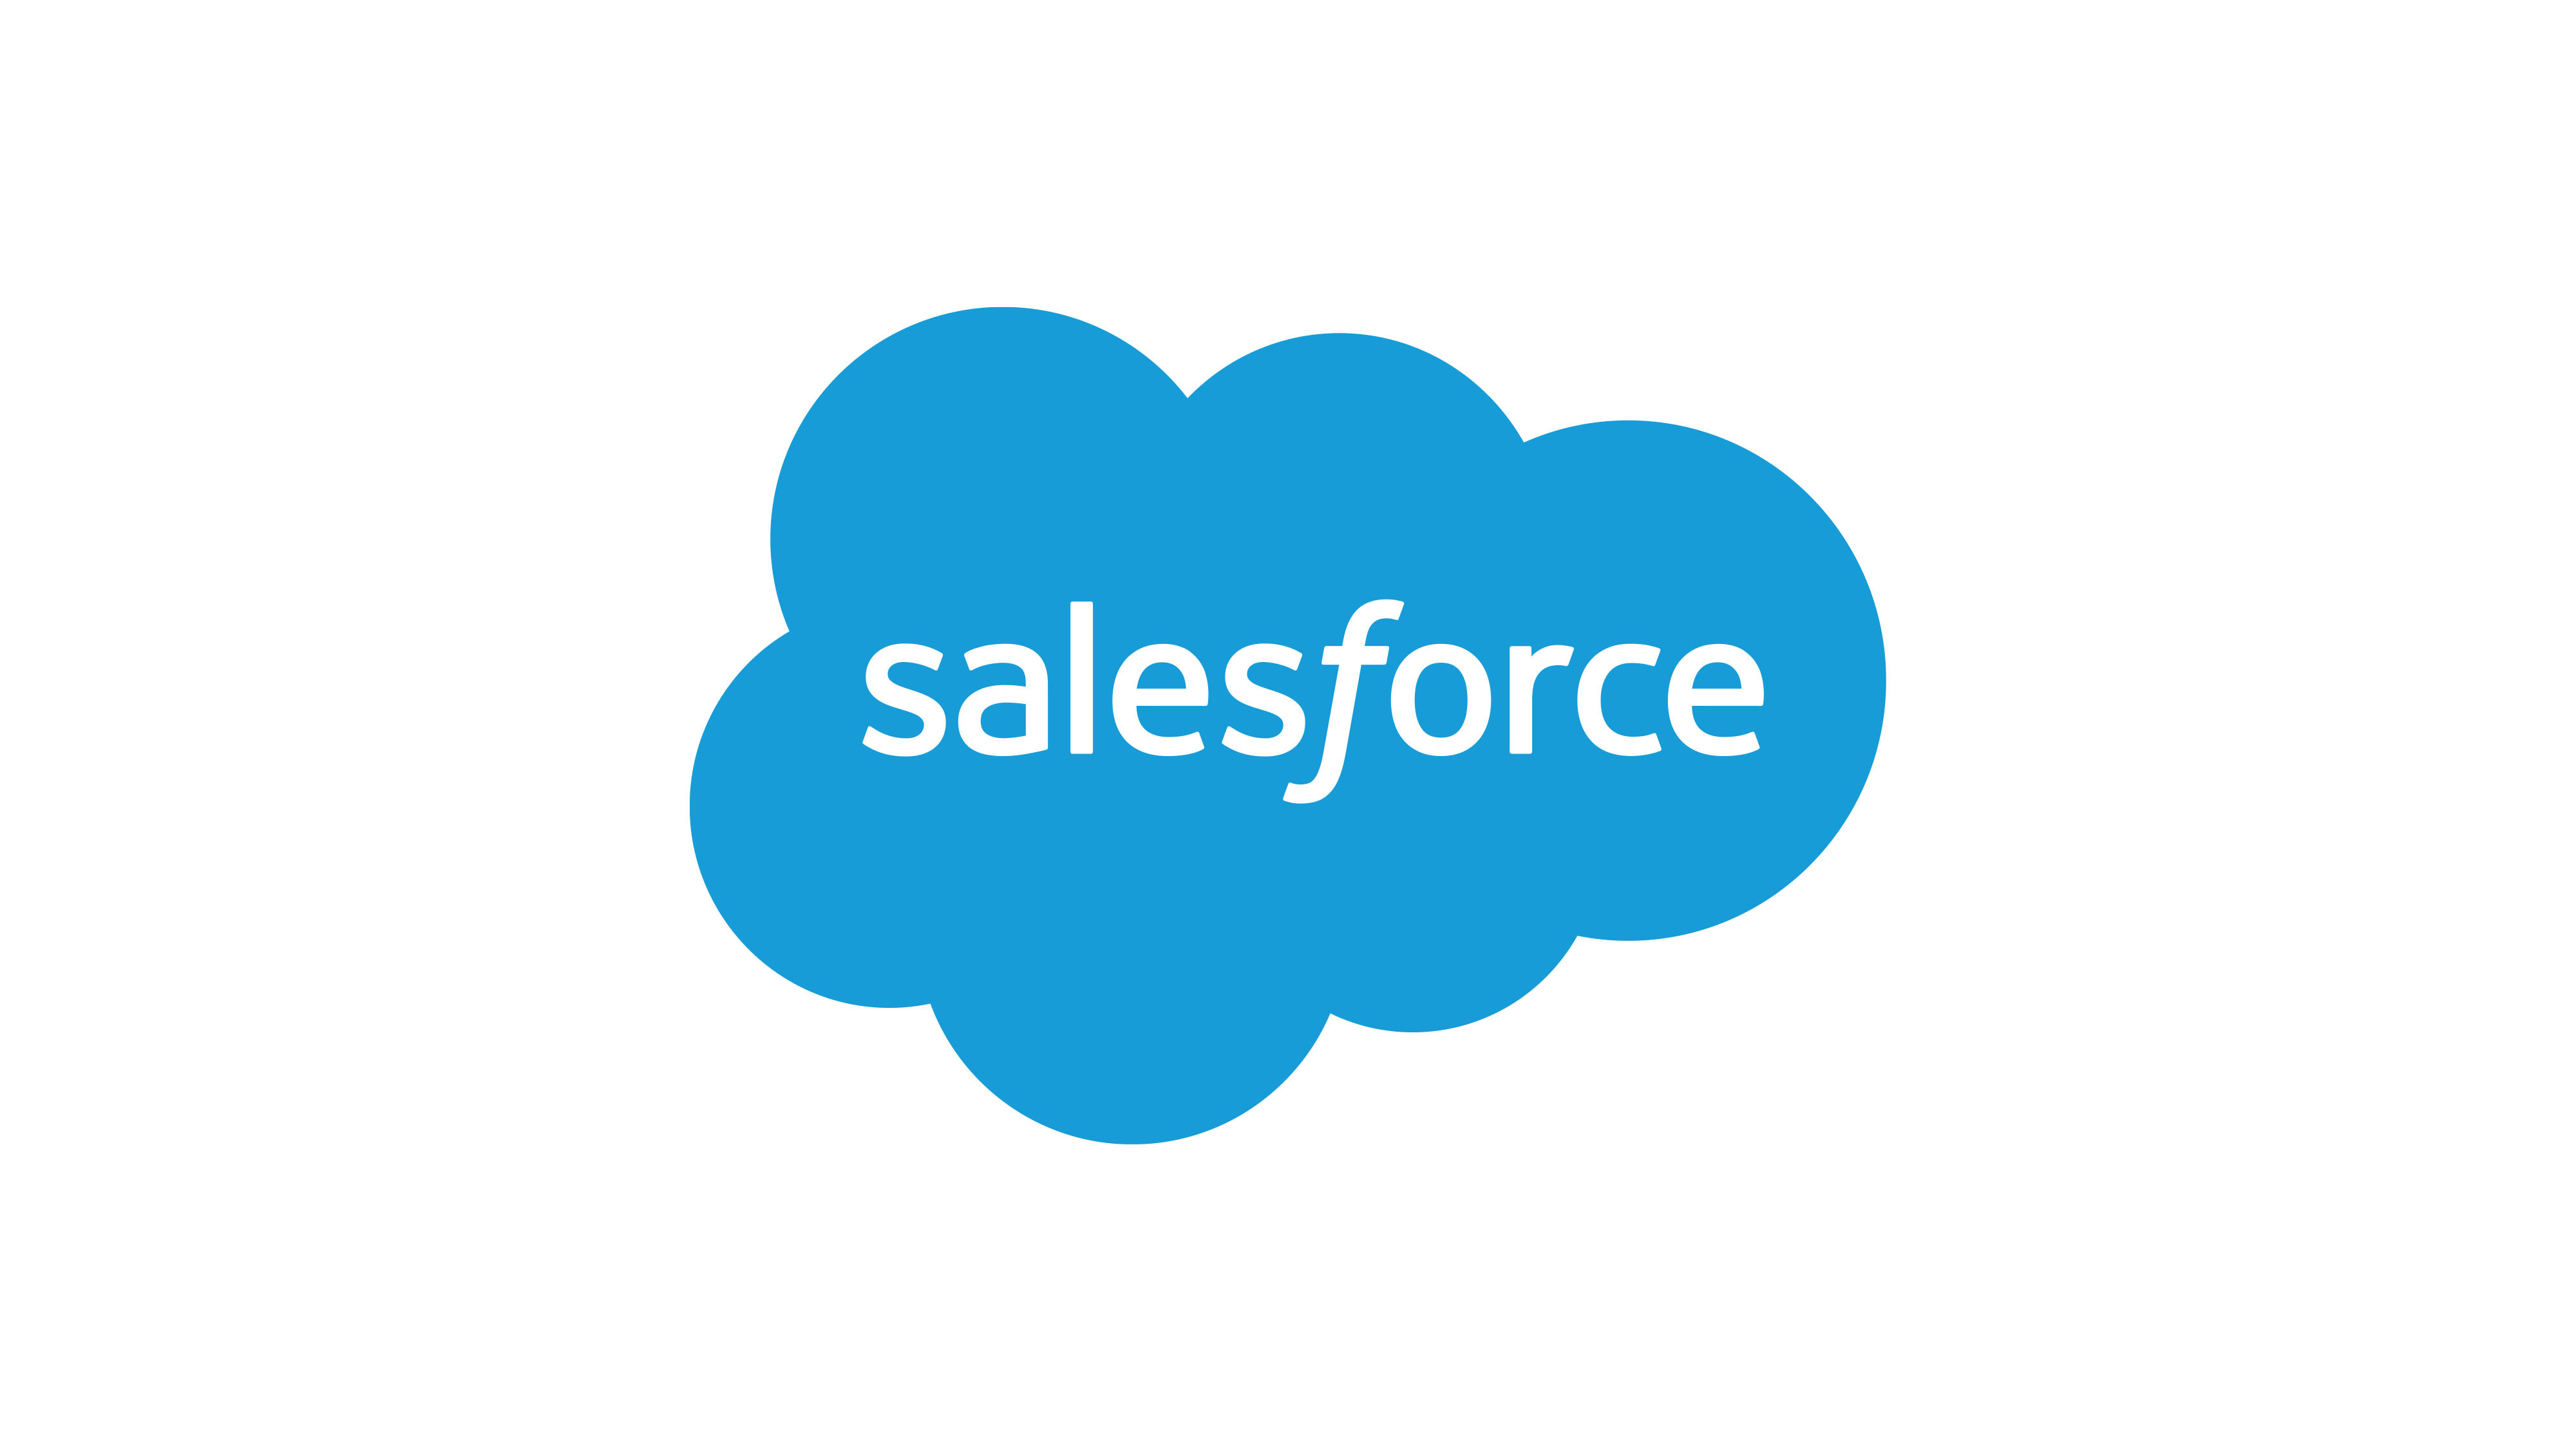 salesforce-logo.jpg (197 KB)